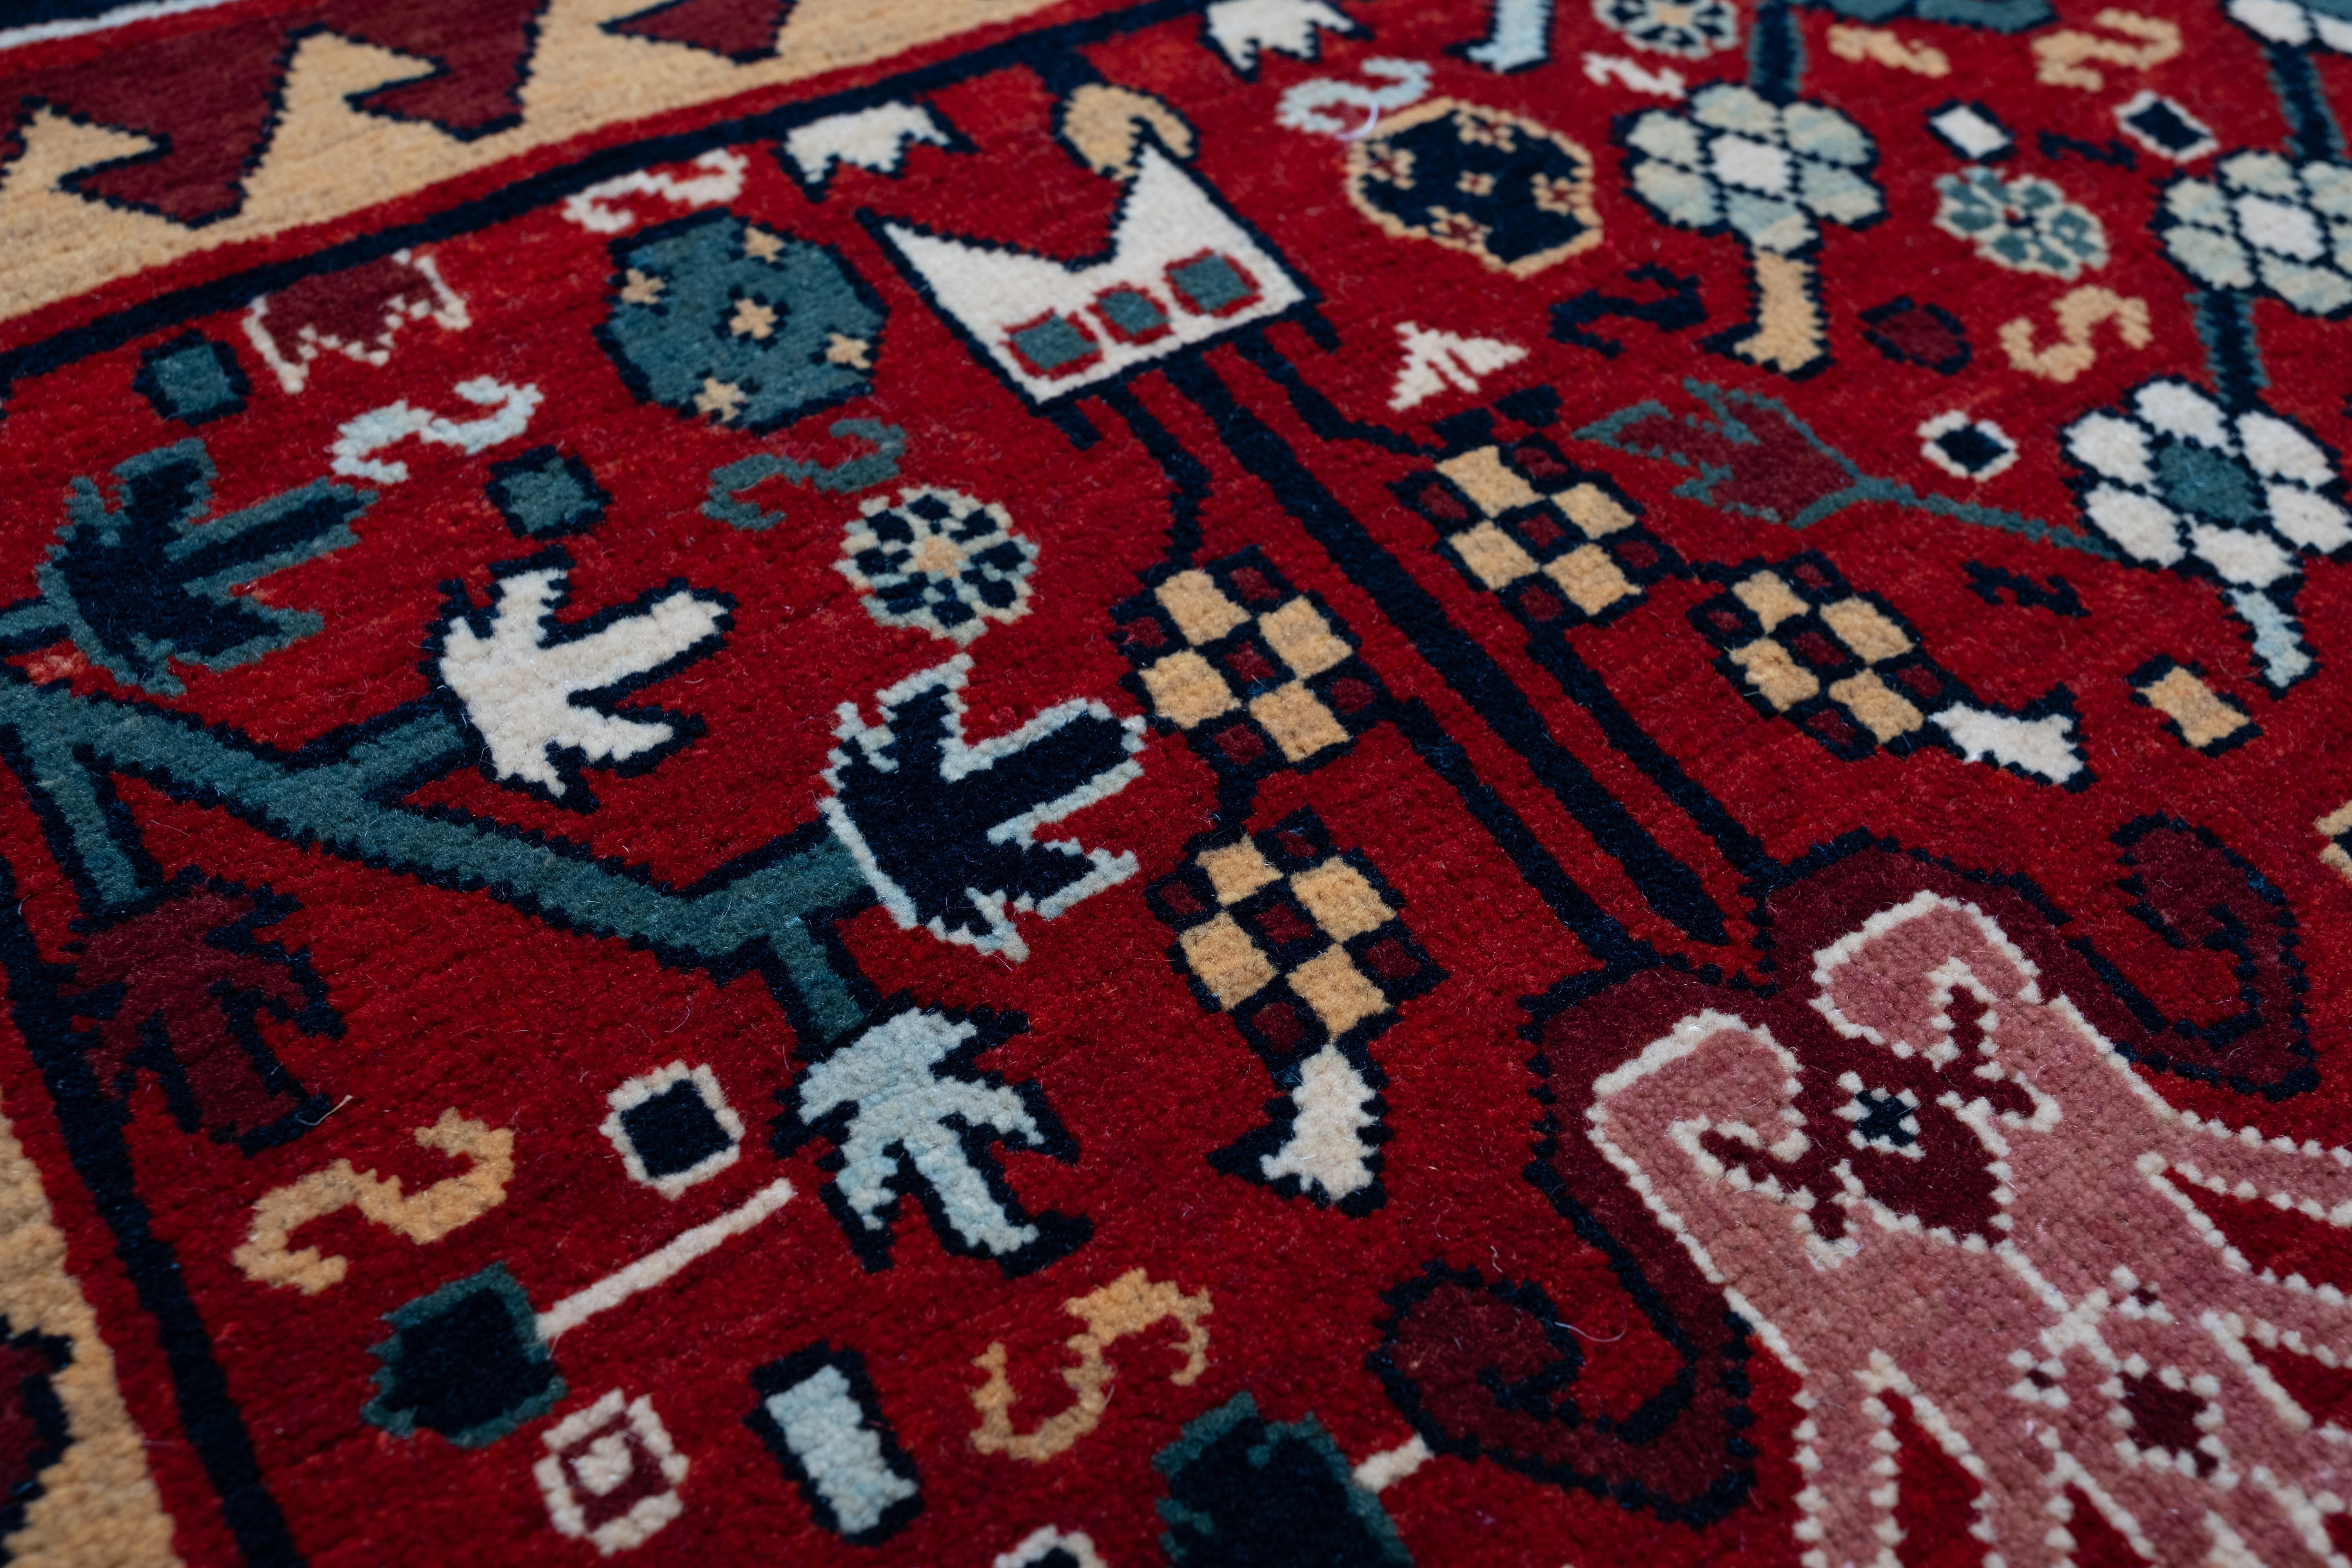 Wool Ararat Rugs Bid Majnum on Red Field Rug, 17th C Revival Carpet, Natural Dyed For Sale